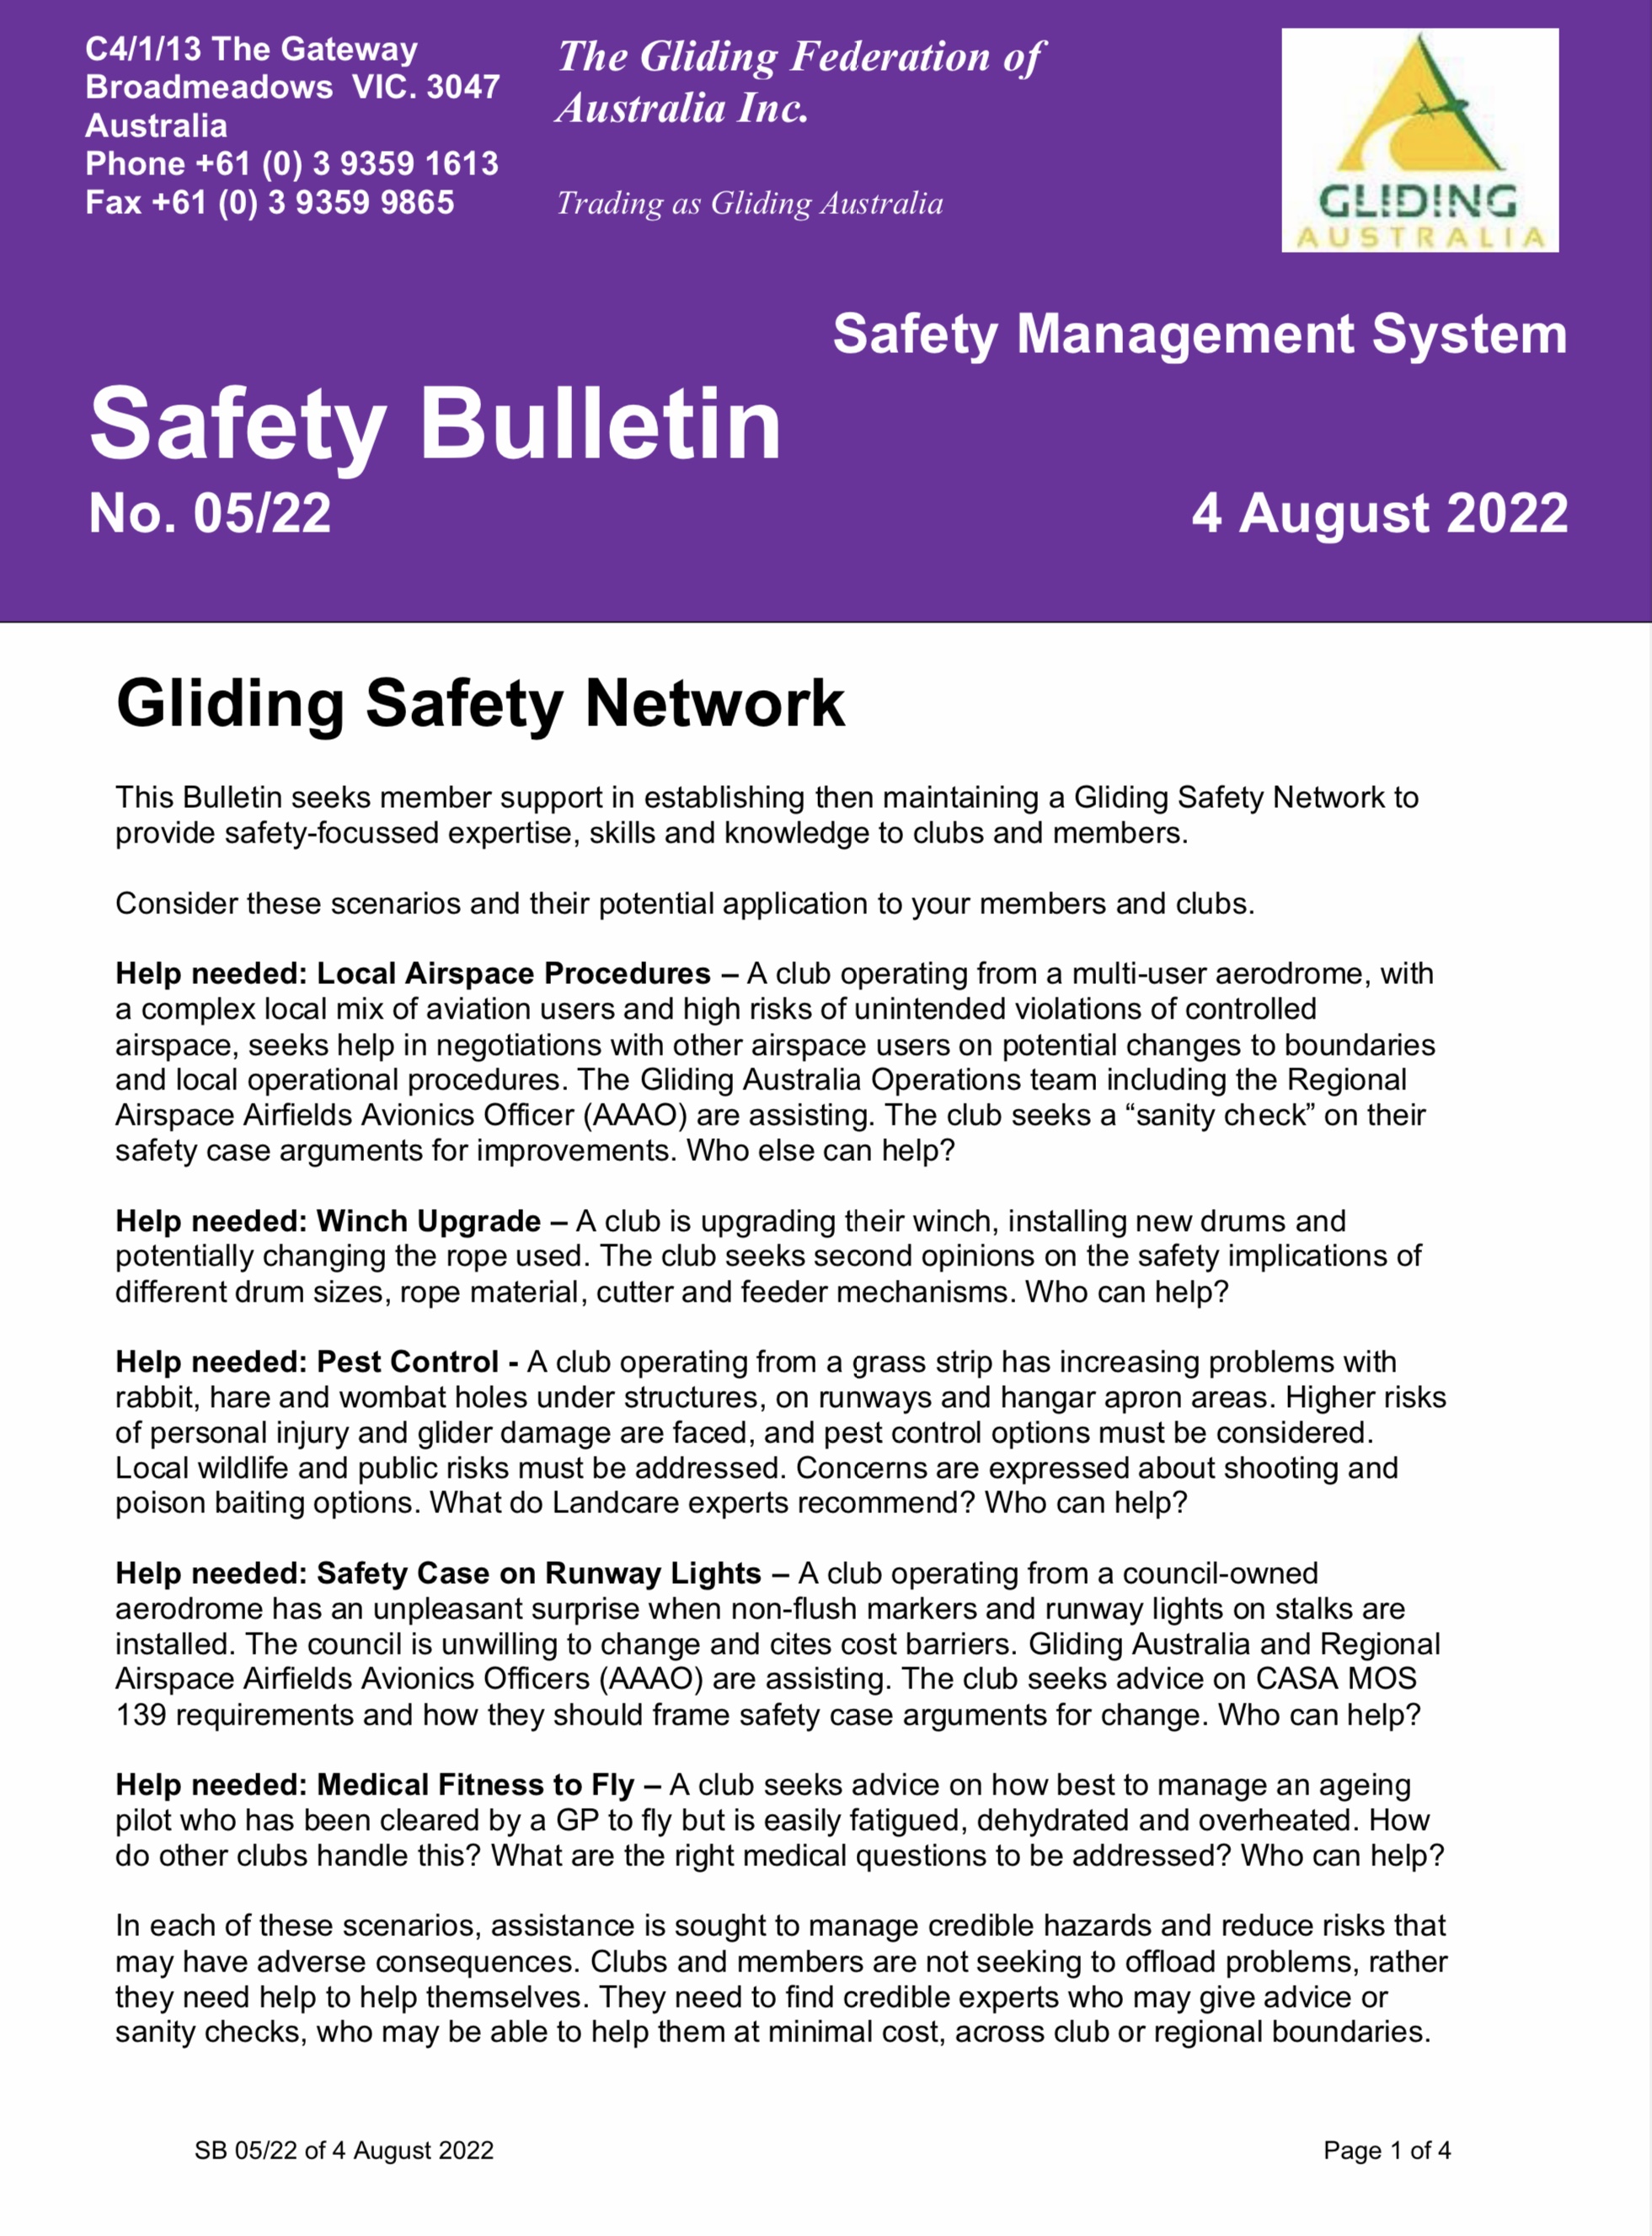 GFA SB 05_22 Gliding Safety Network